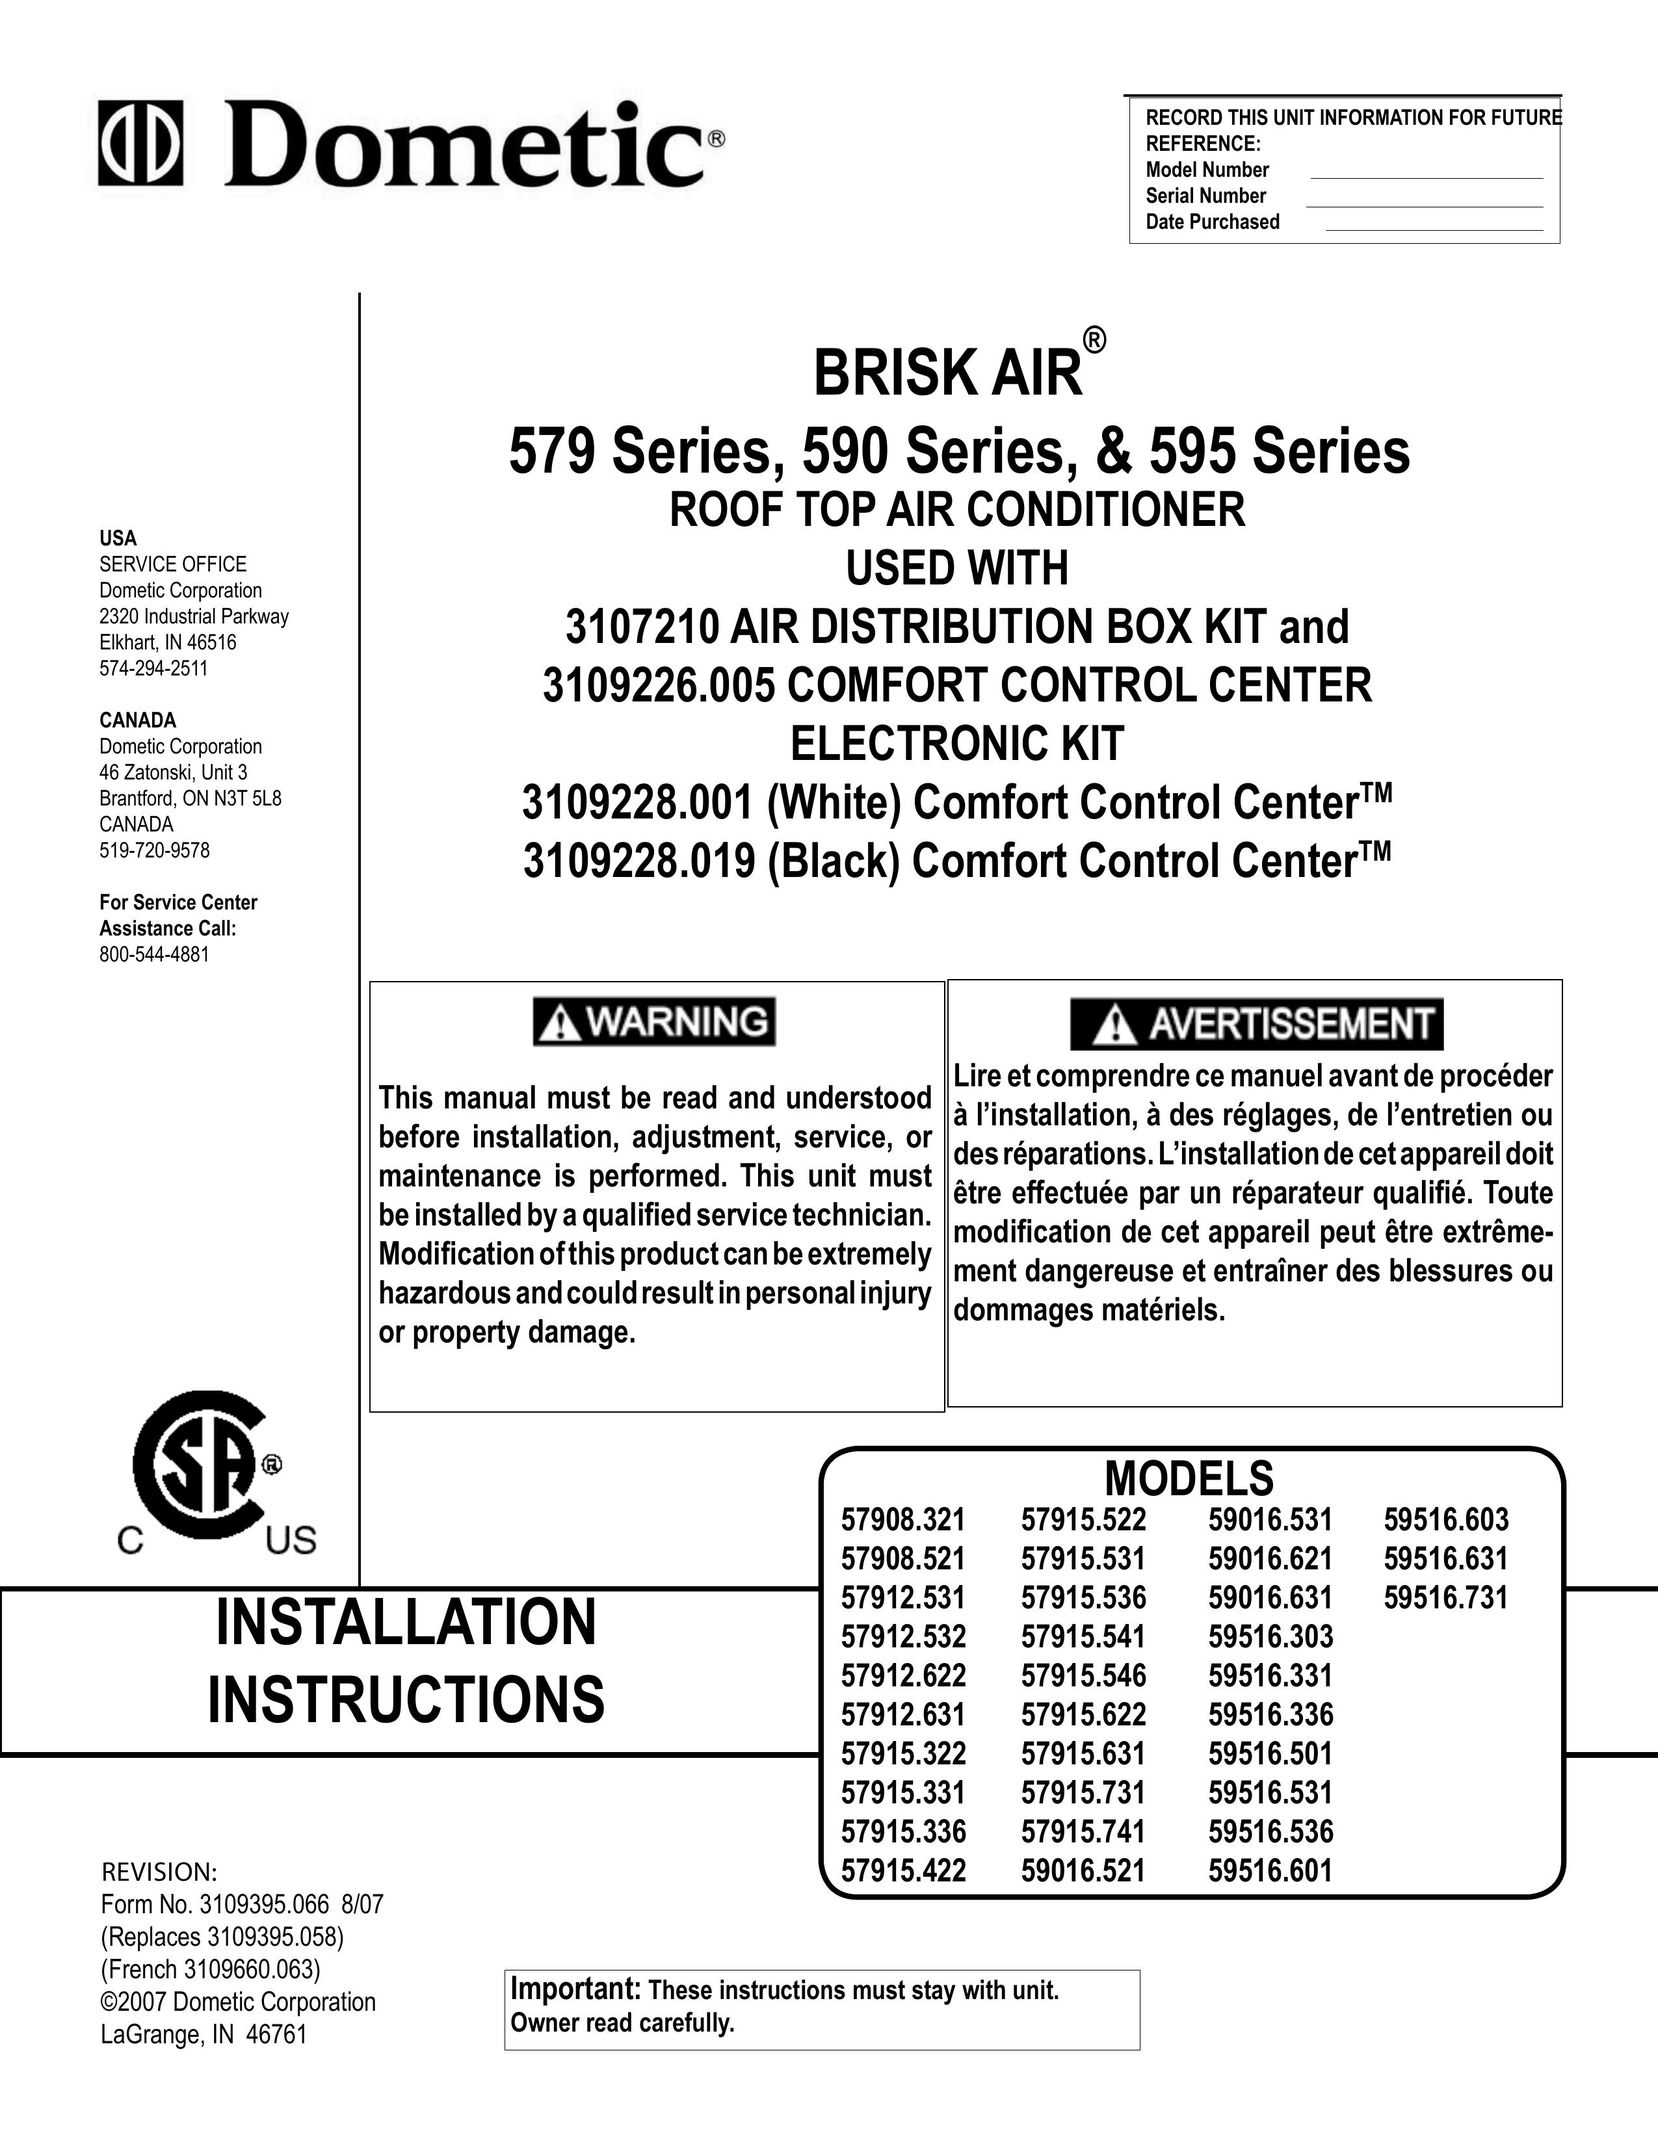 Dometic 595 SERIES Air Conditioner User Manual